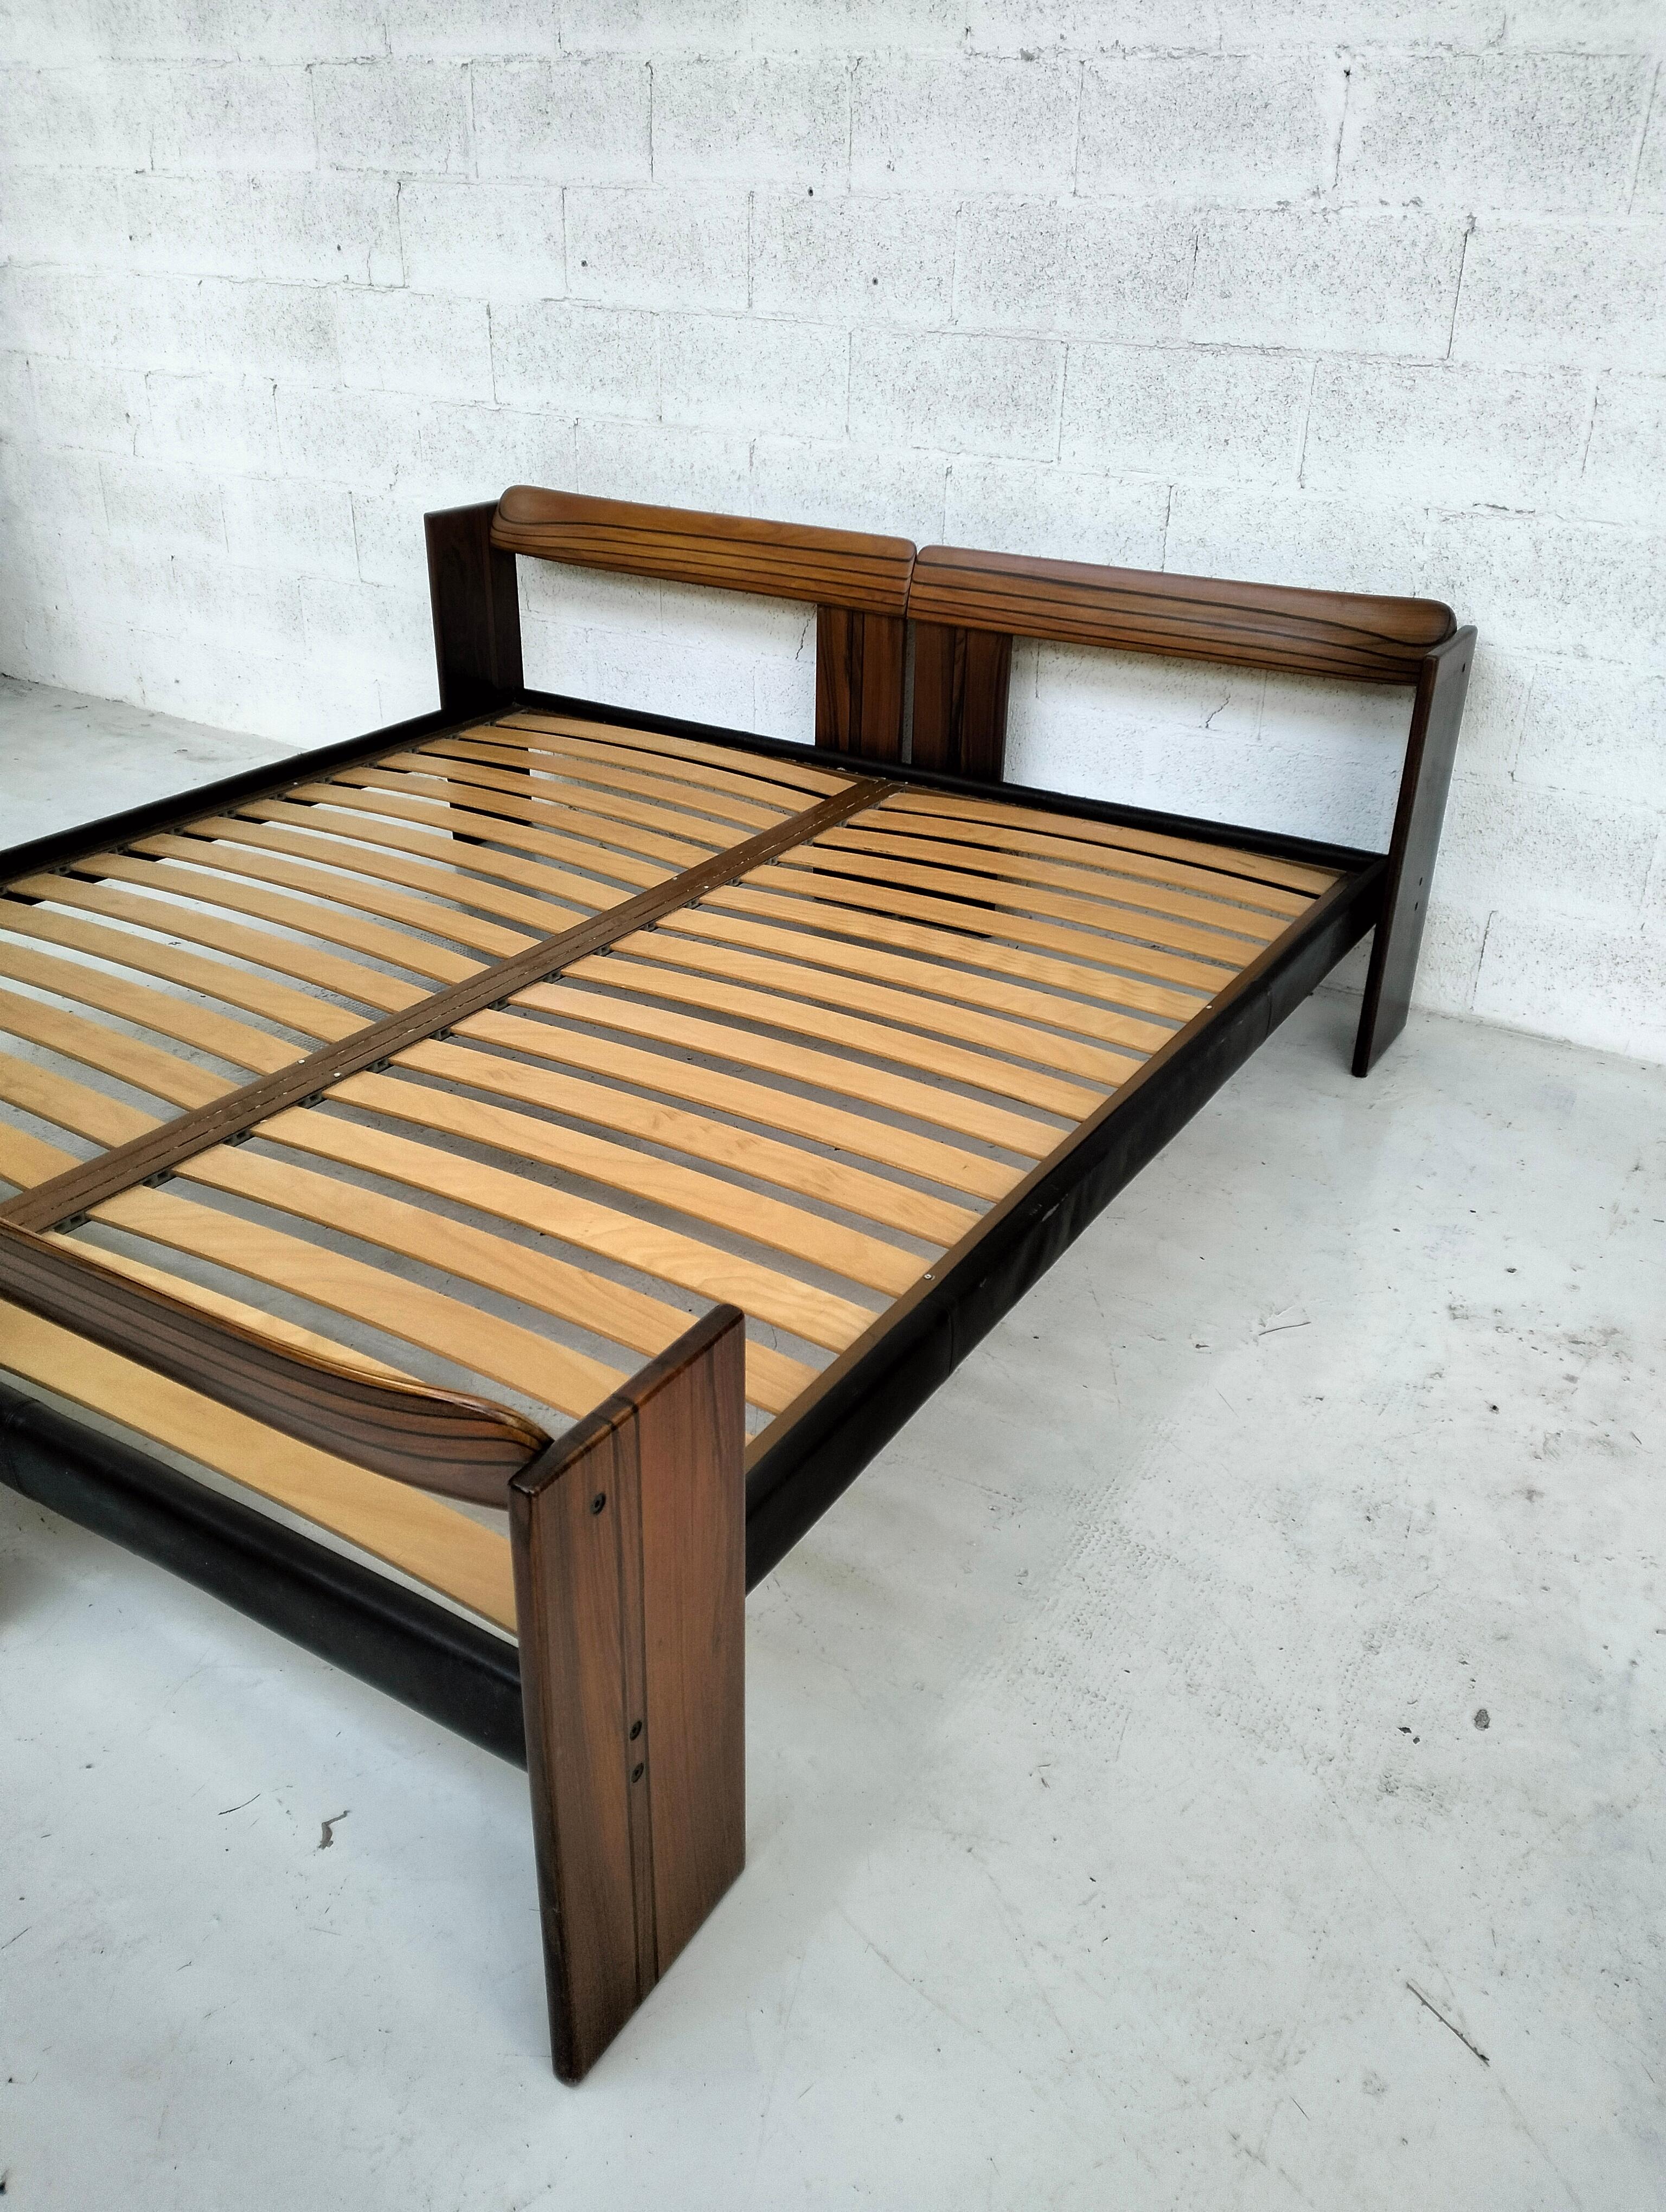  Artona Double bed by Afra e Tobia Scarpa for Maxalto 1970s For Sale 4